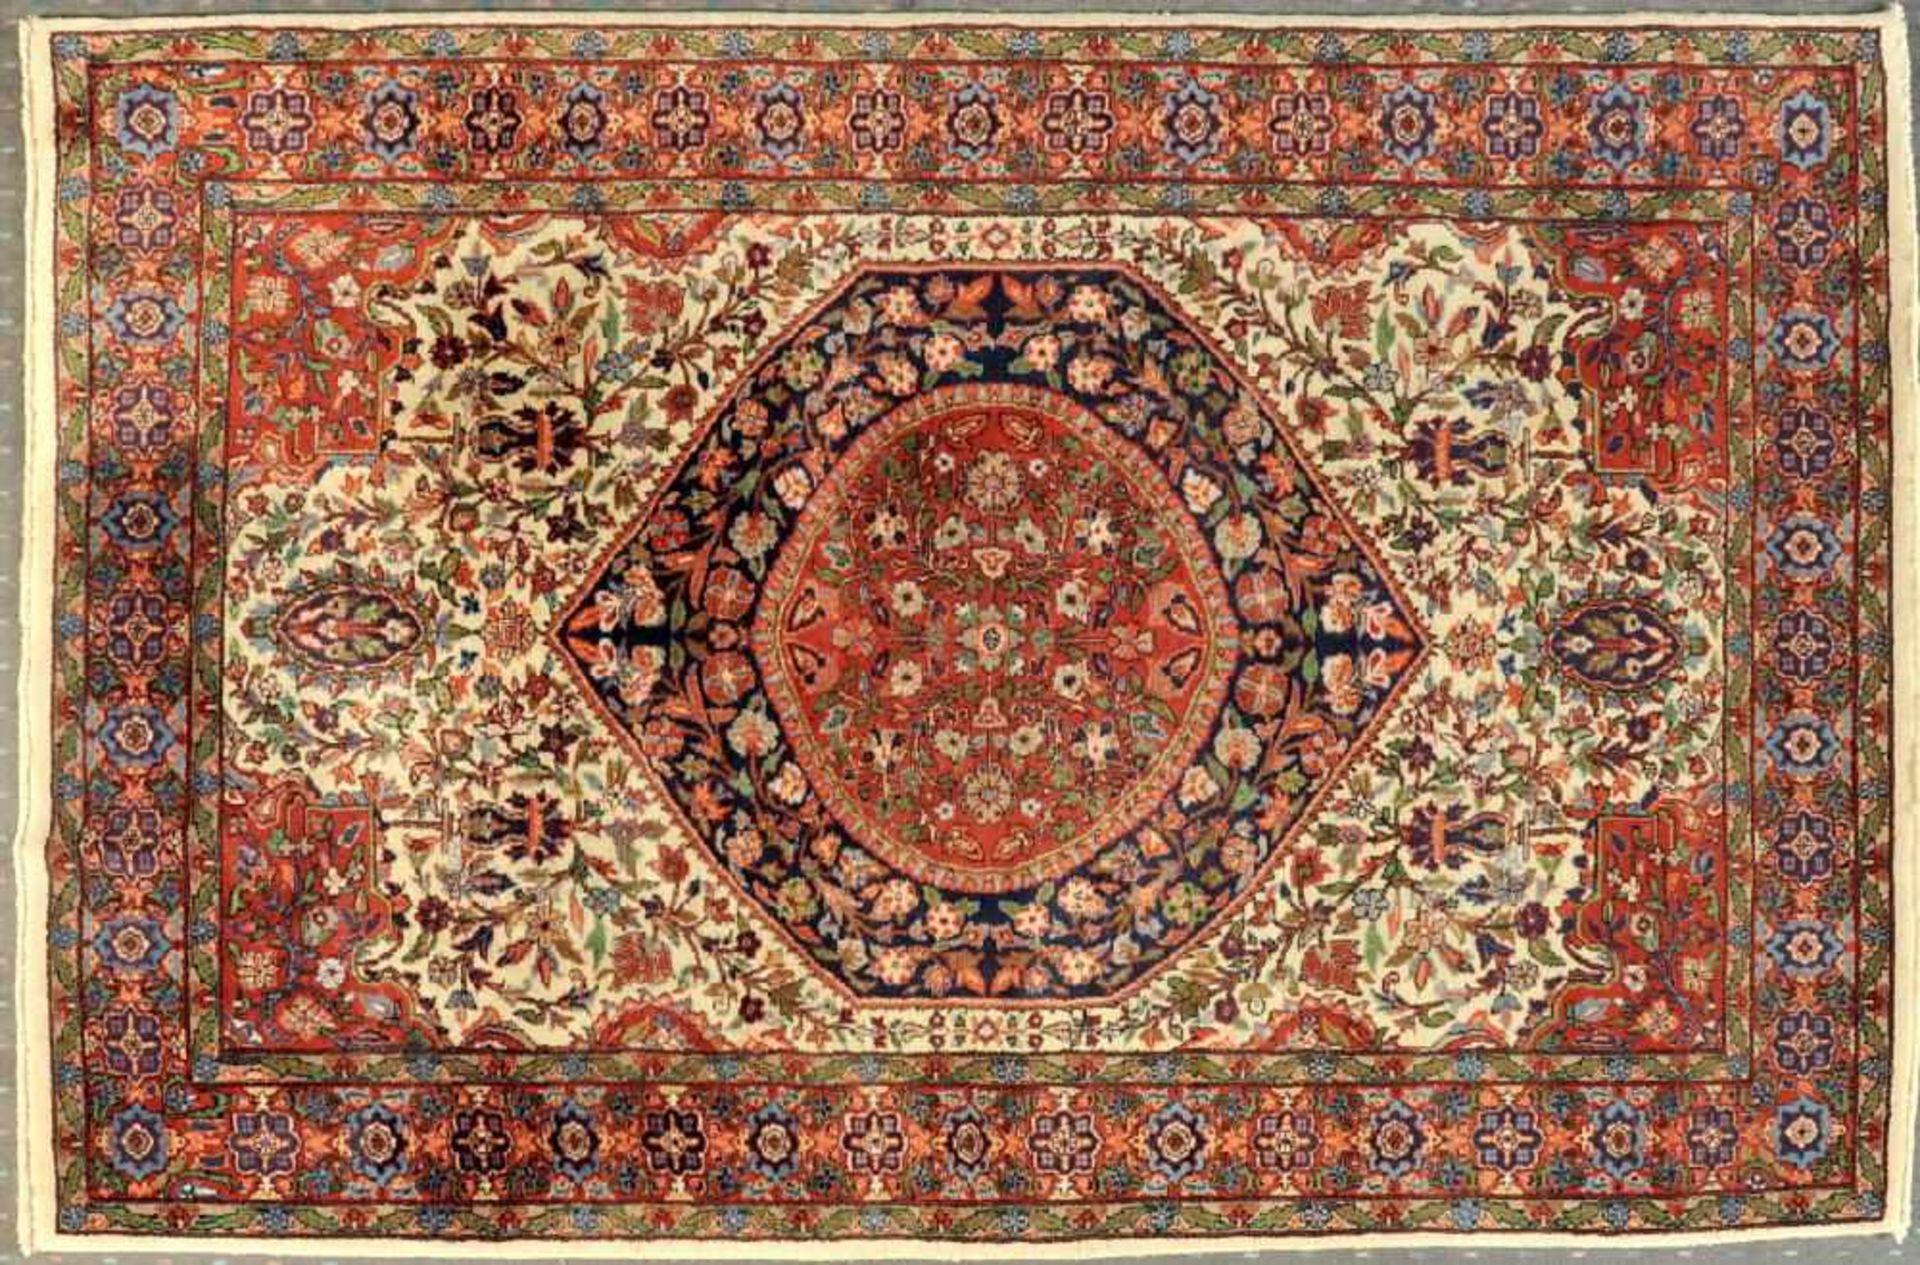 Ghoum, Kaschmir, 123 x 185 cmälter, Wolle, feine Knüpfung, hellgrundig, großes, mehrfarb.